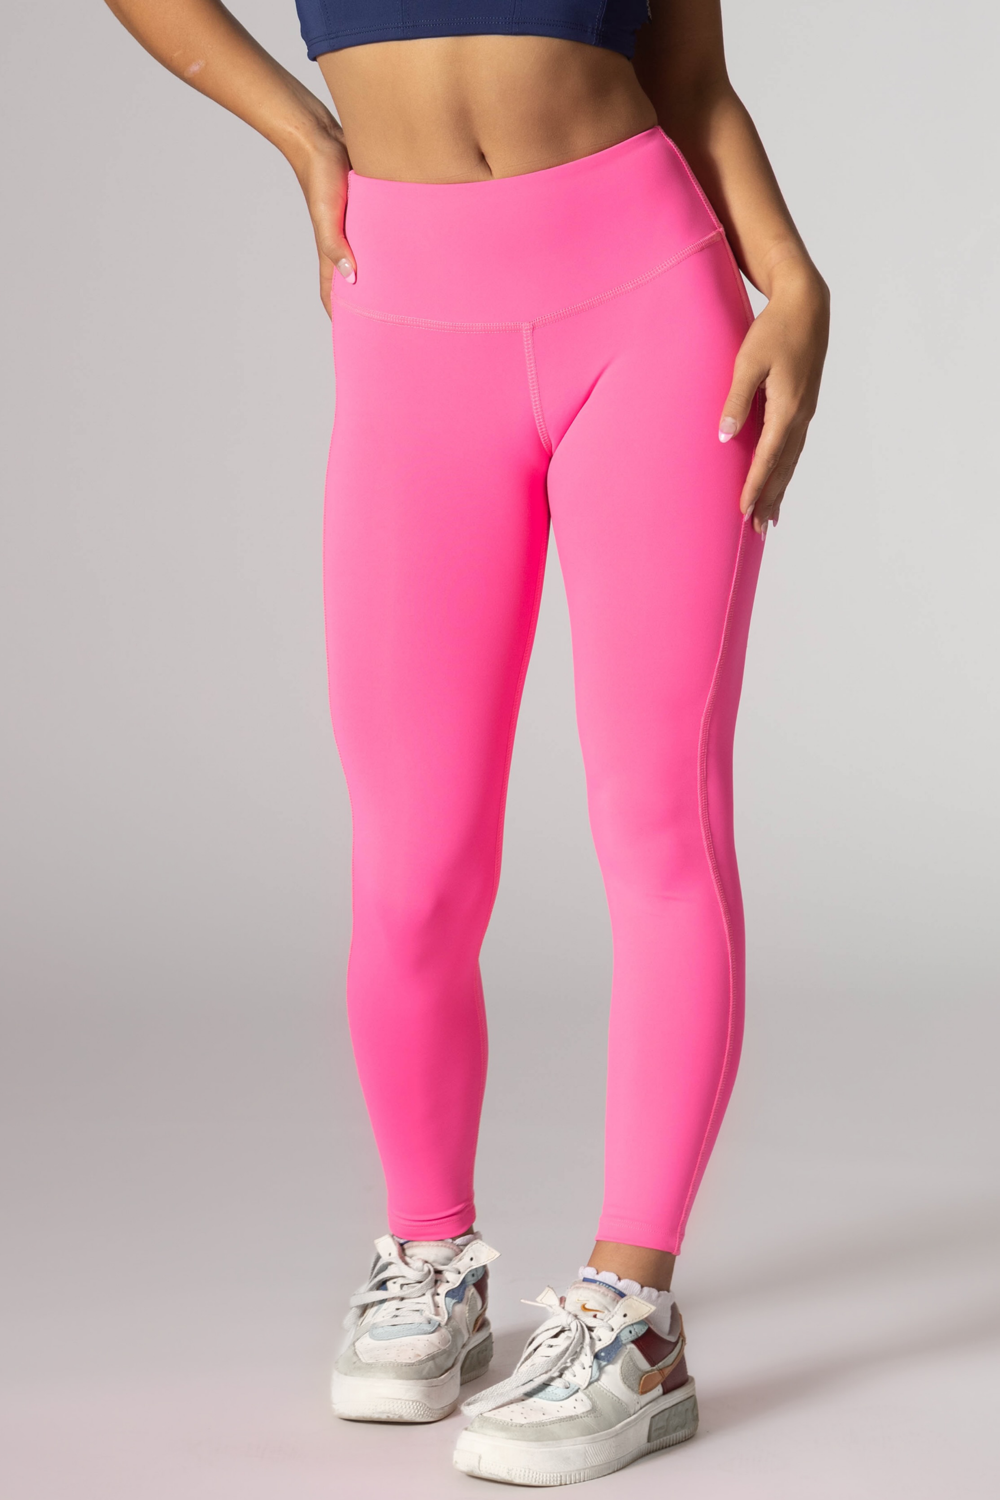 Lululemon align leggings women's size 6 in Pink Savannah.